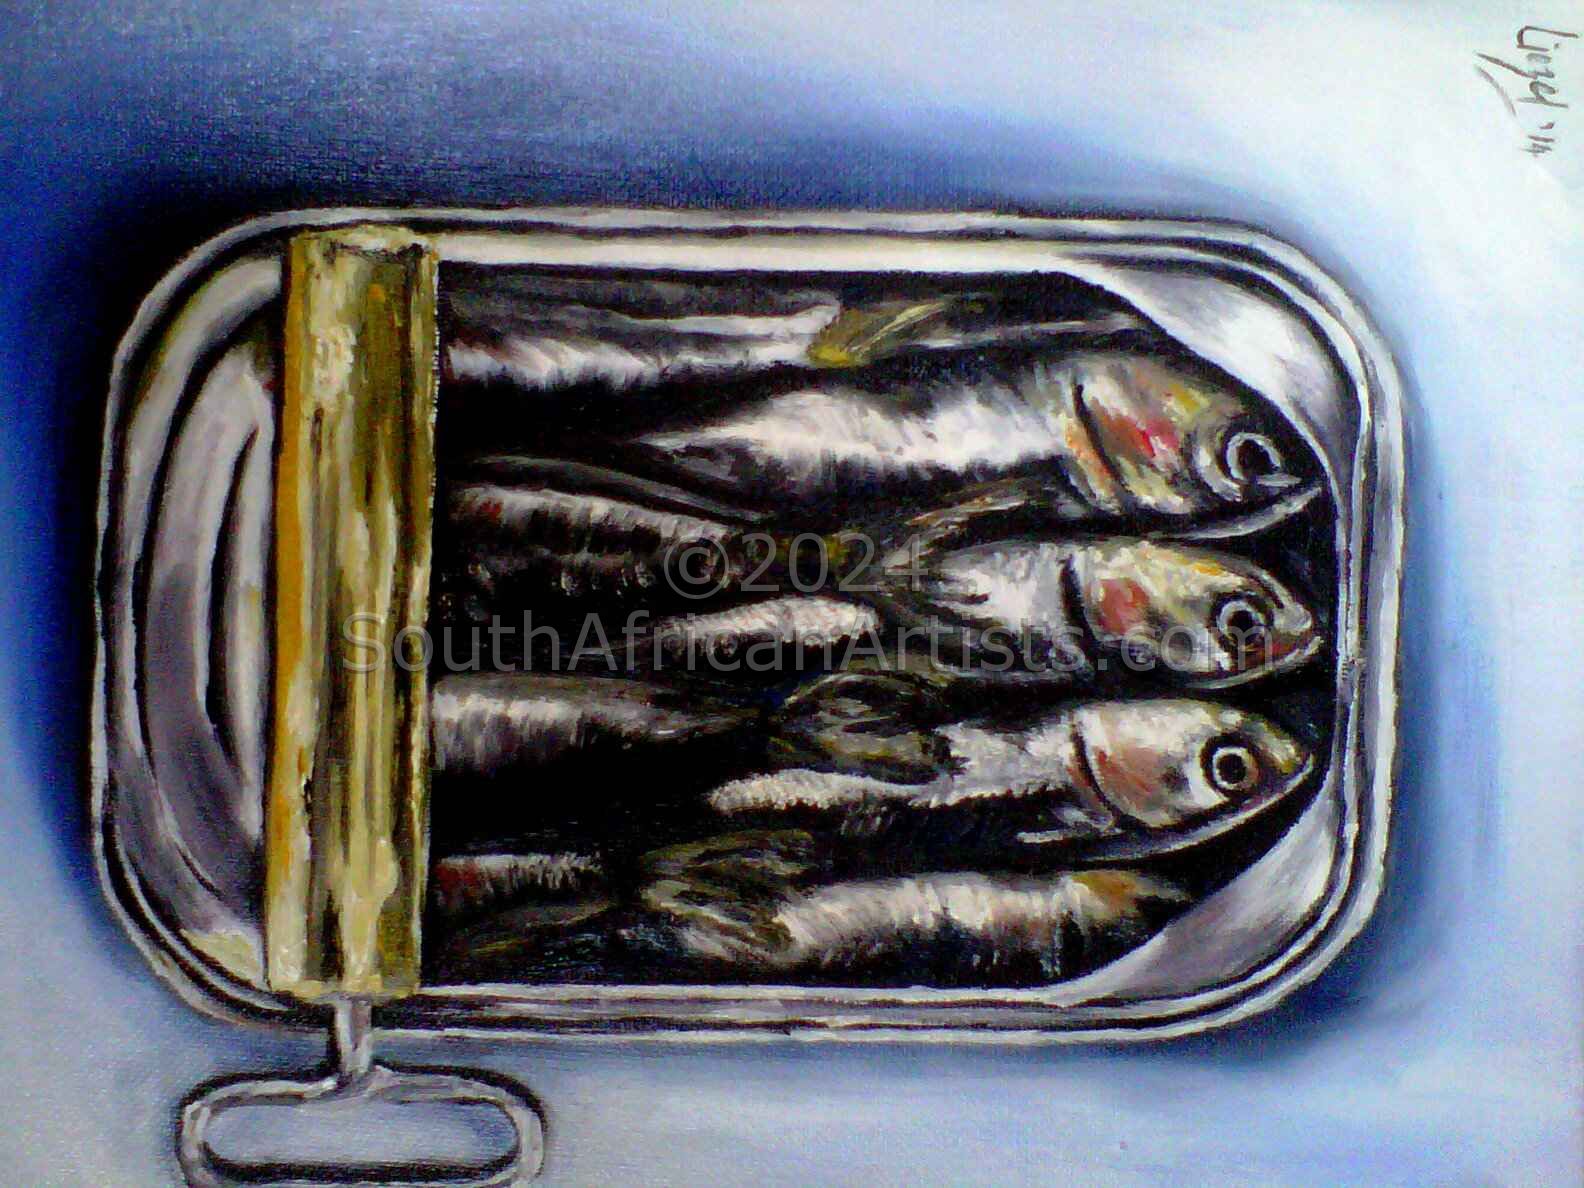 Sardines Cramped in a Tin